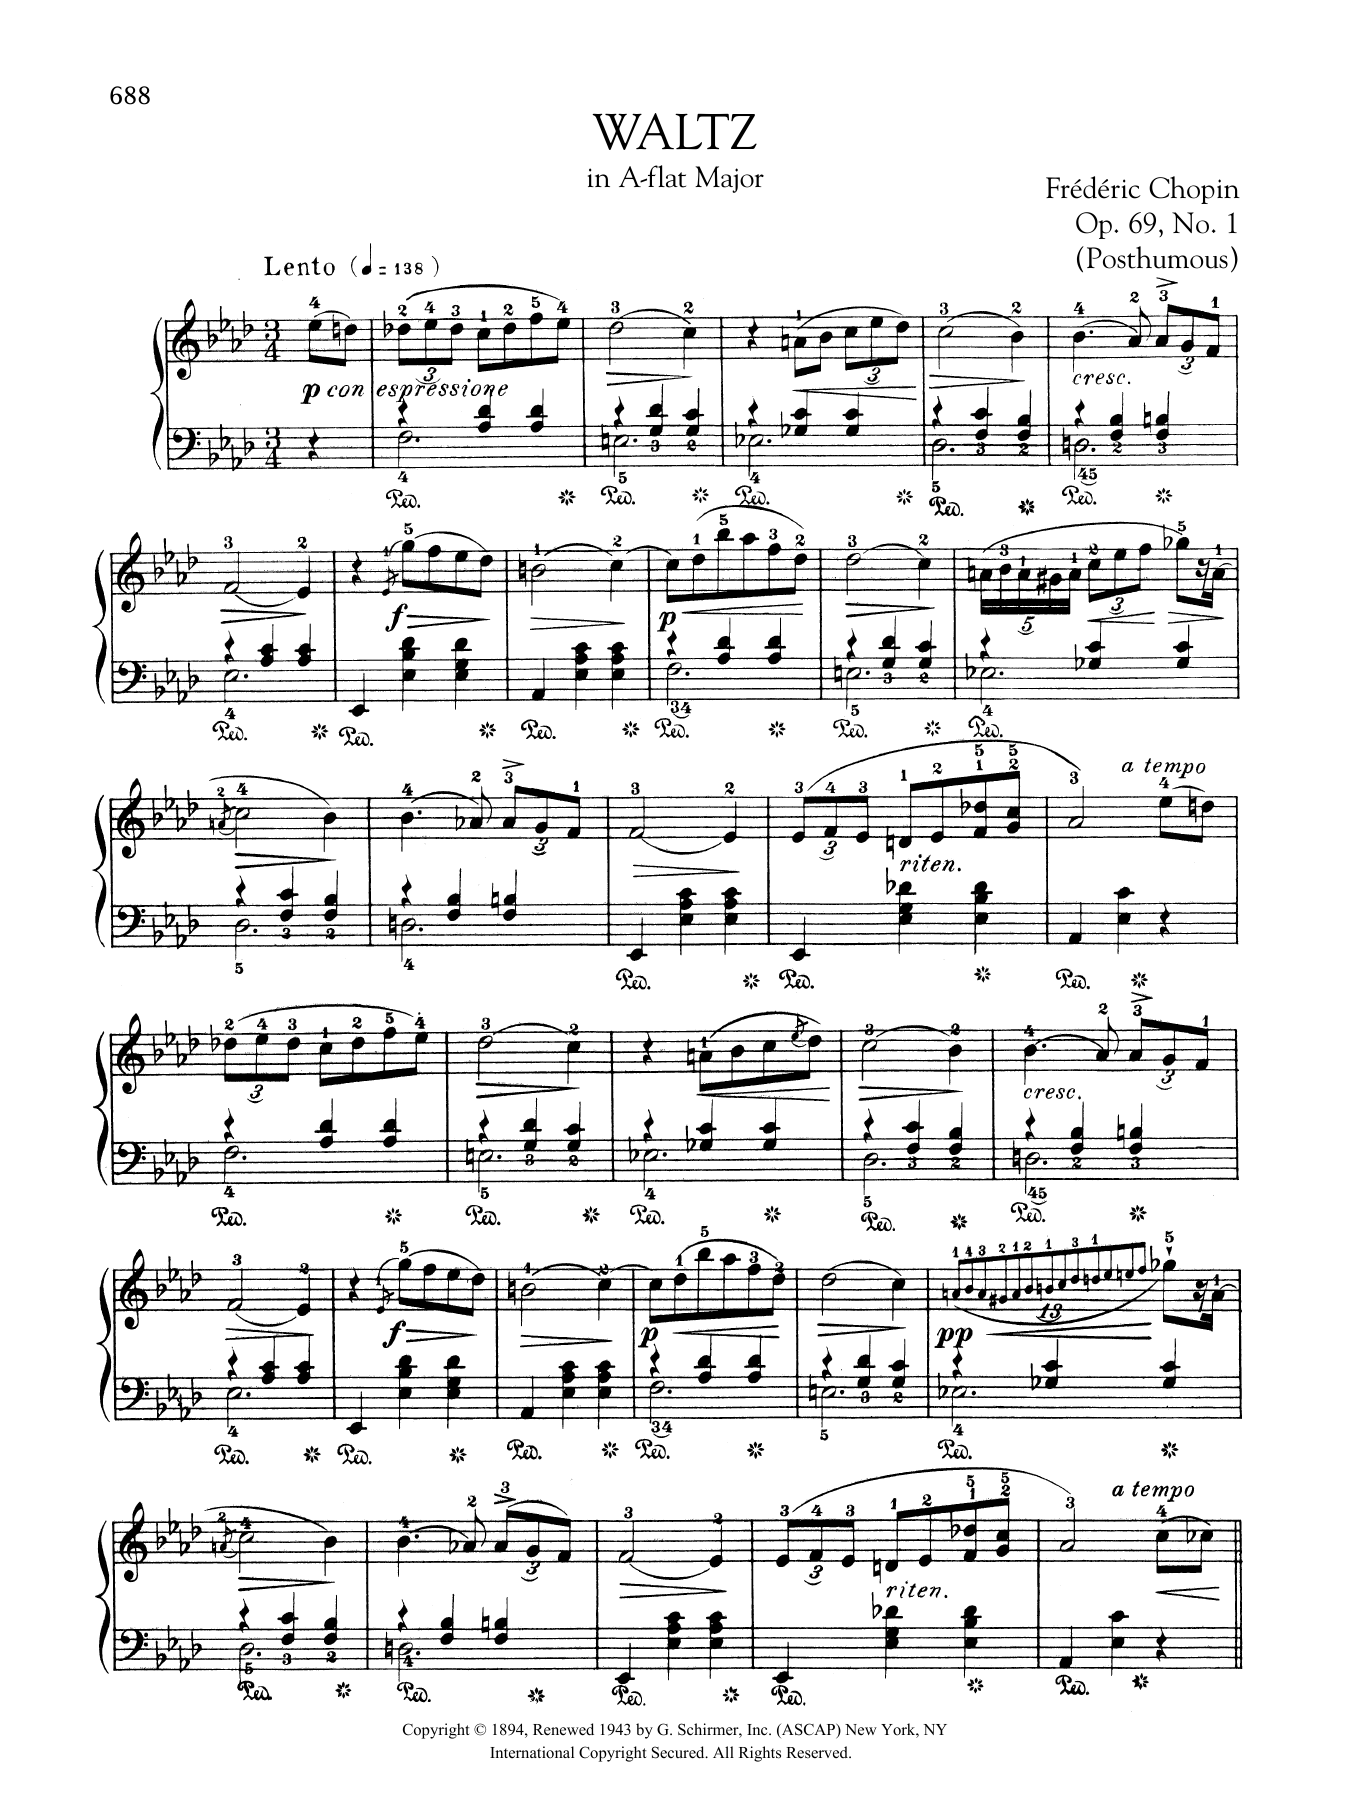 Download Frederic Chopin Waltz in A-flat Major, Op. 69, No. 1 (P Sheet Music